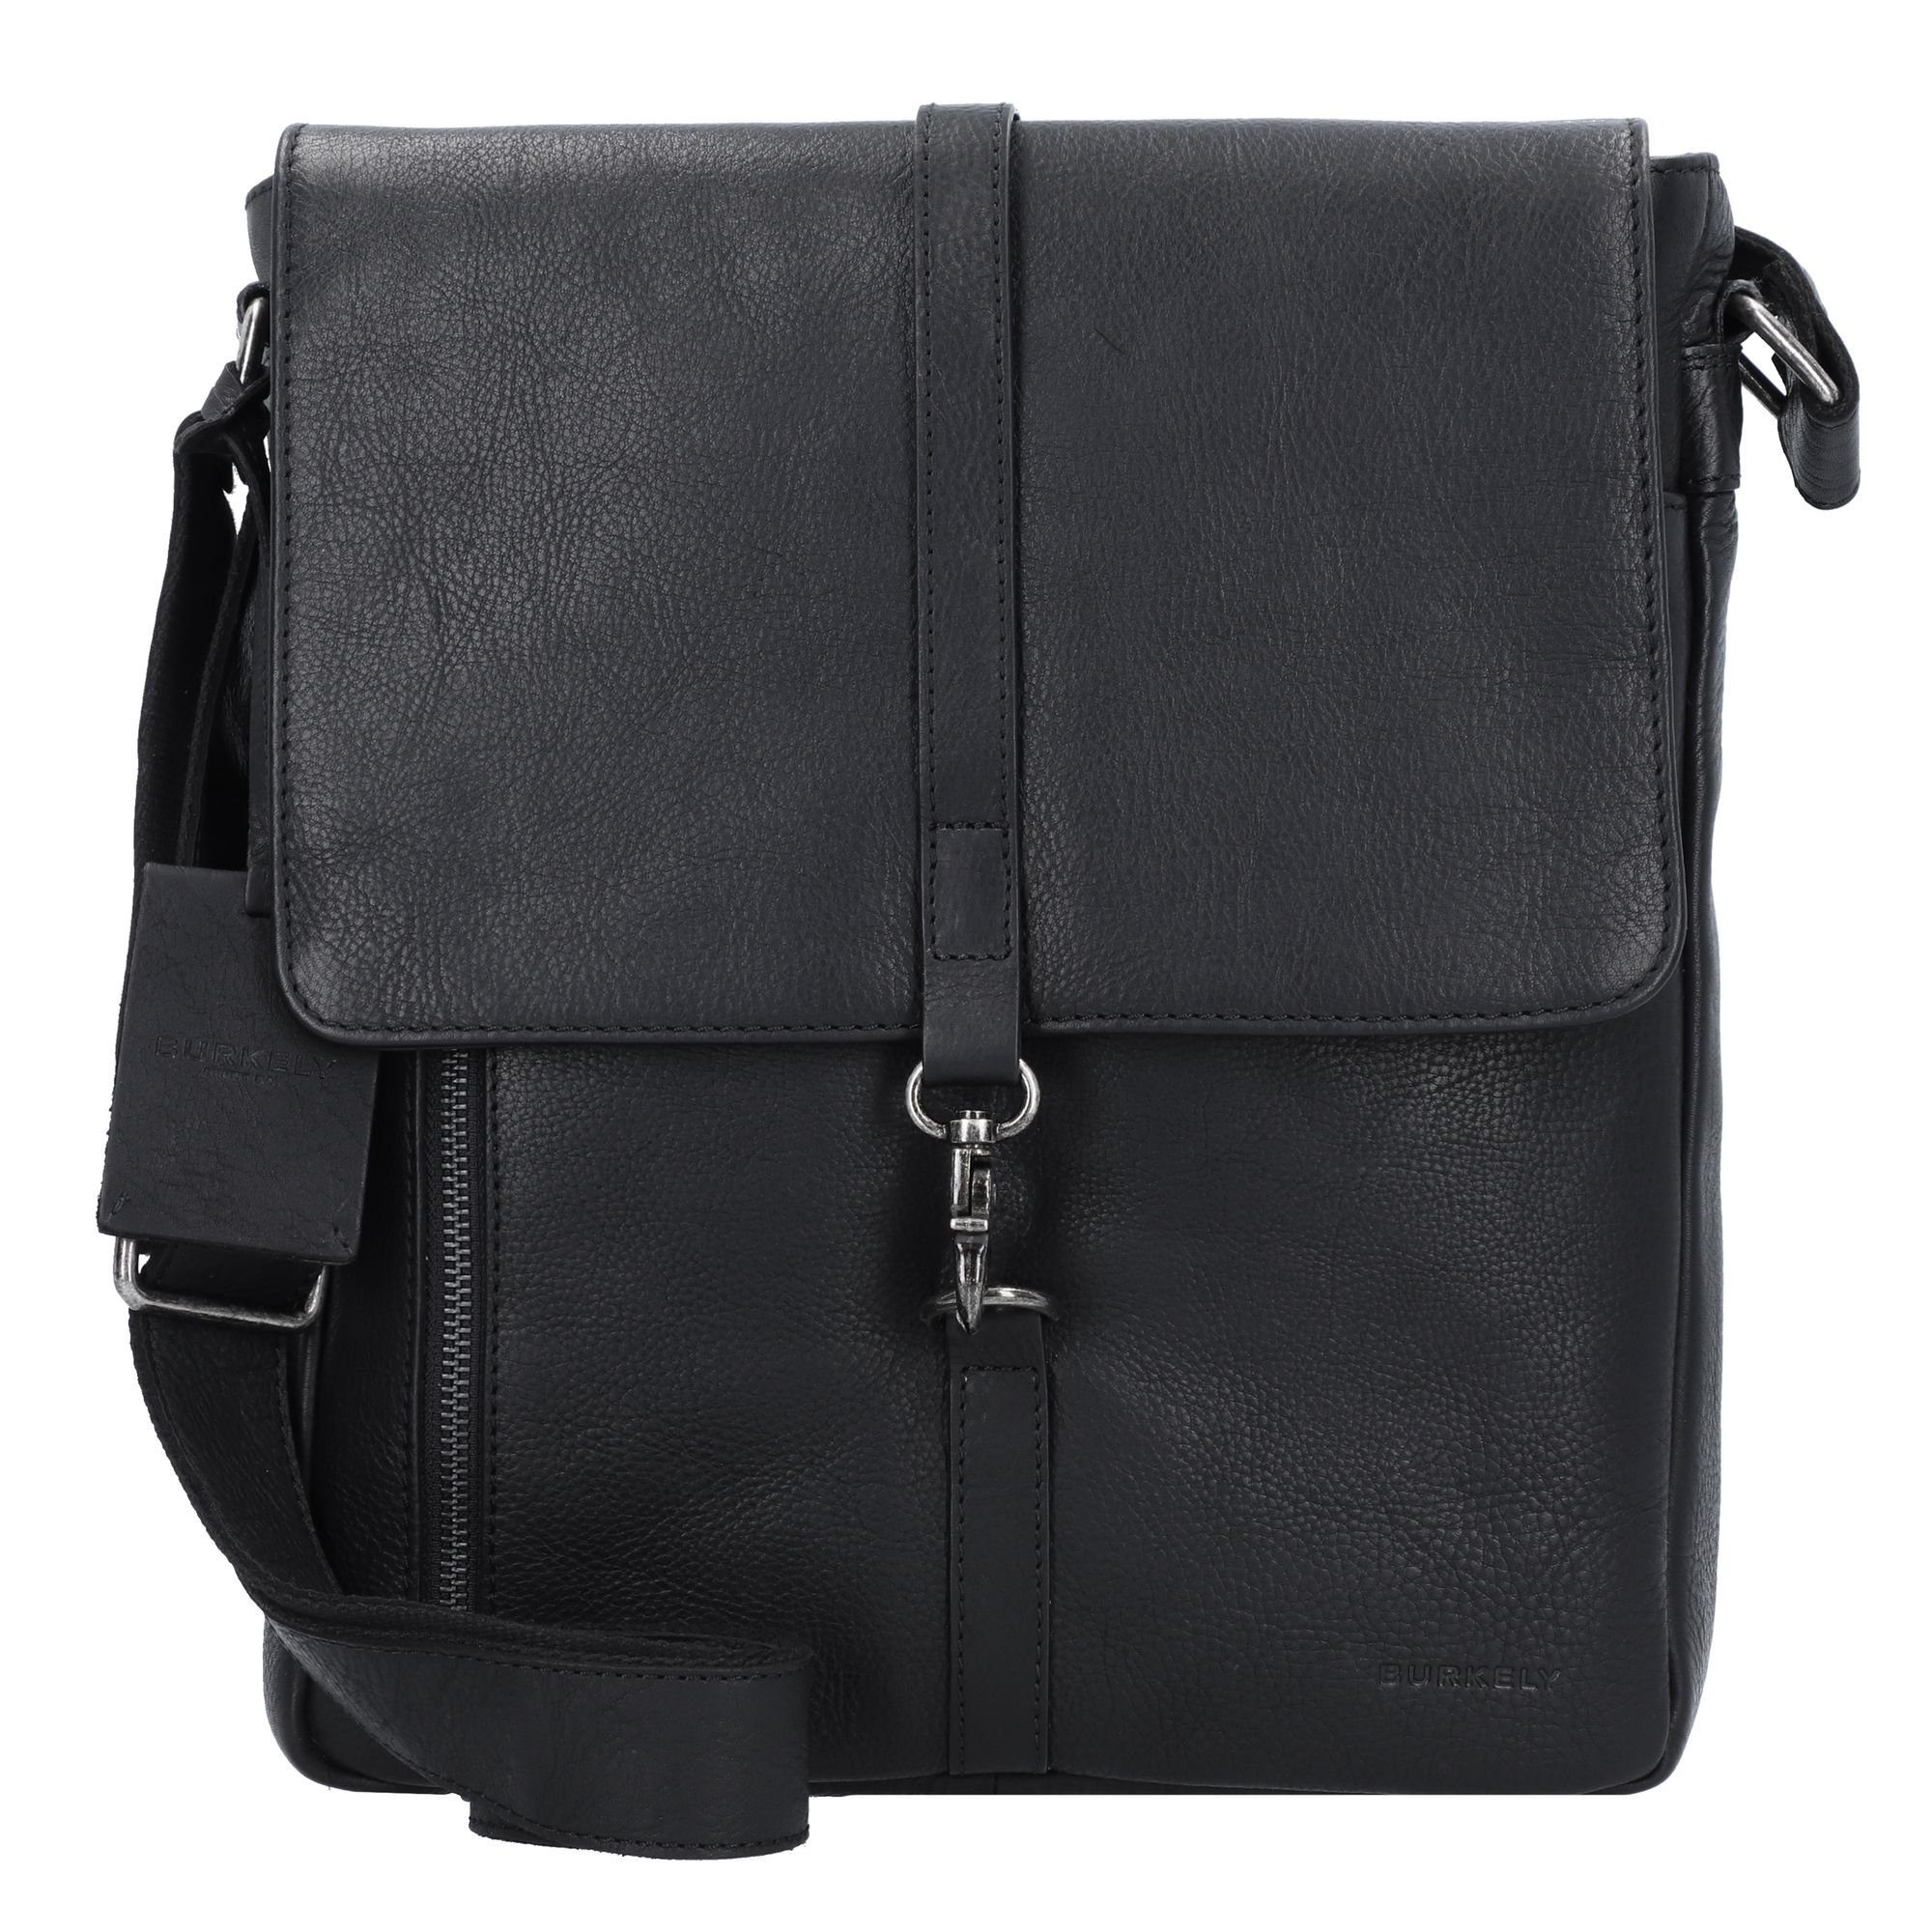 Preis ist unschlagbar Burkley Burkely Messenger Bag Leder Avery, Antique black